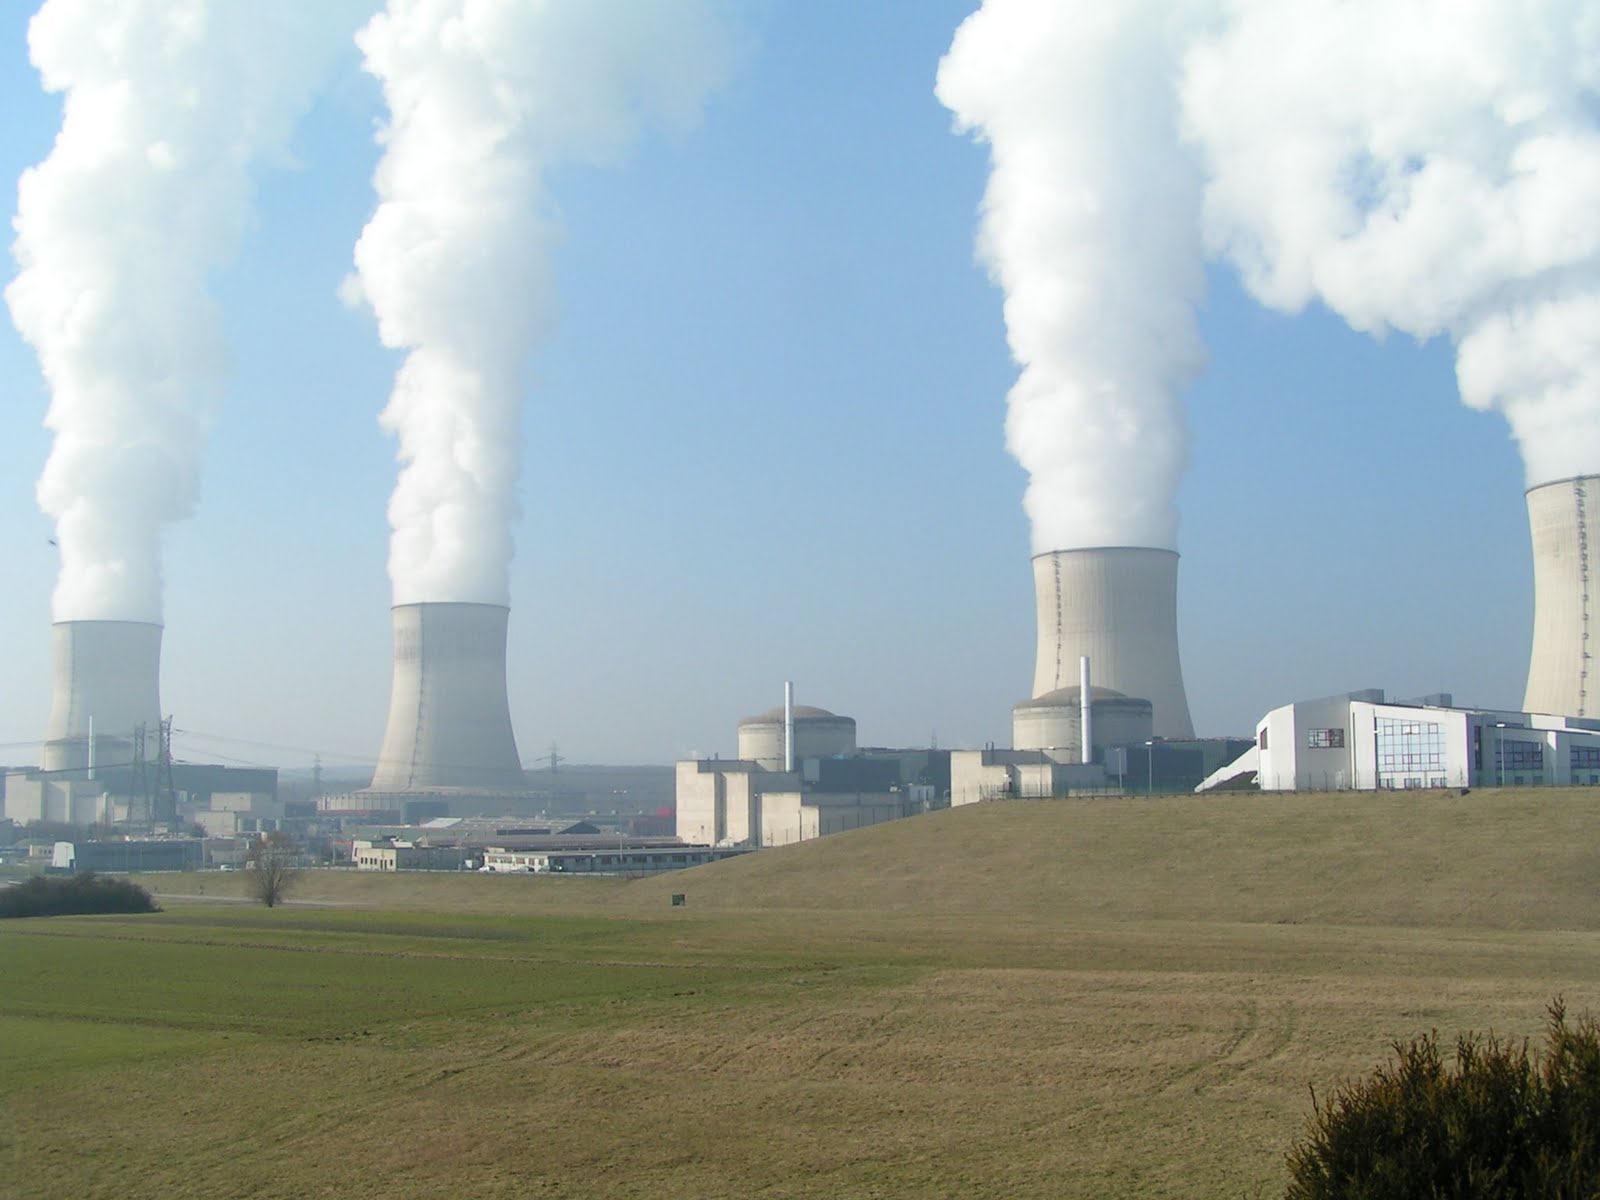 Nova batalha contra a energia nuclear